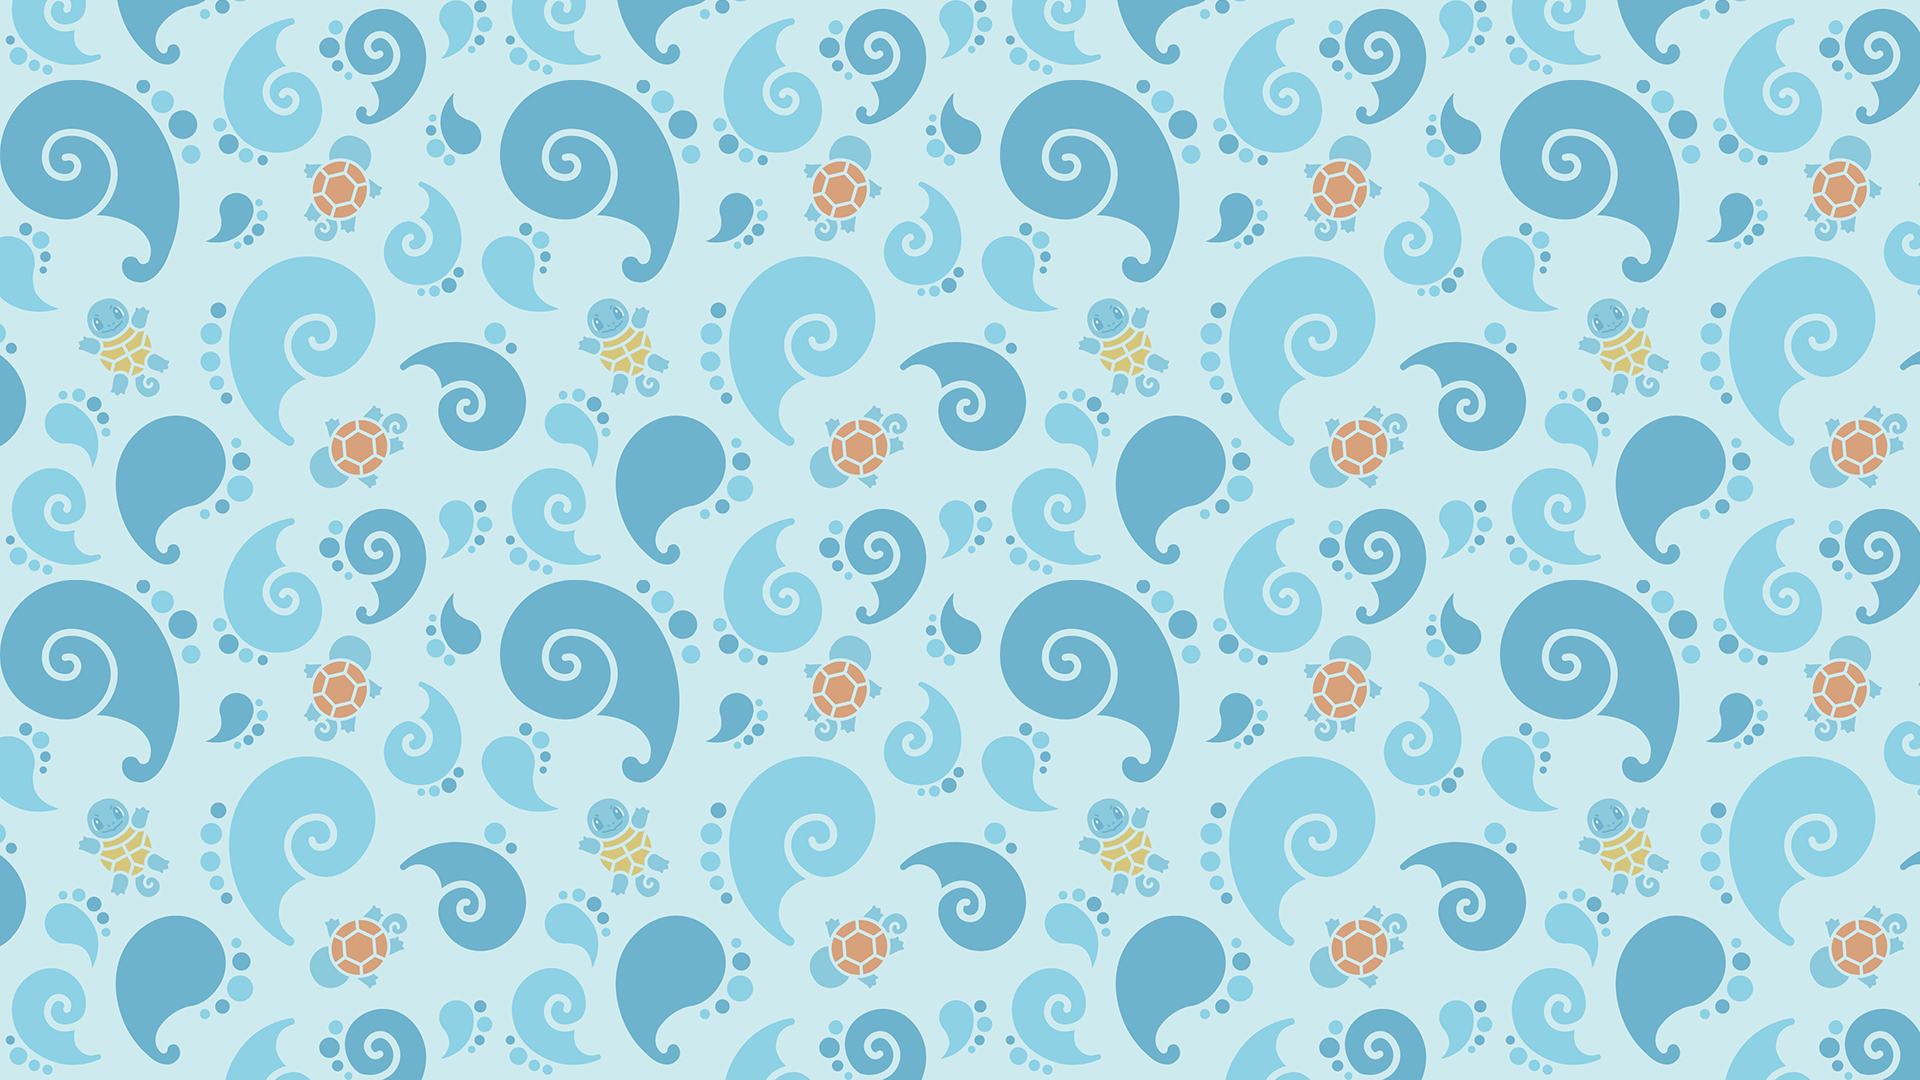 General 1920x1080 Pokémon tiles cartoon pattern blue simple background